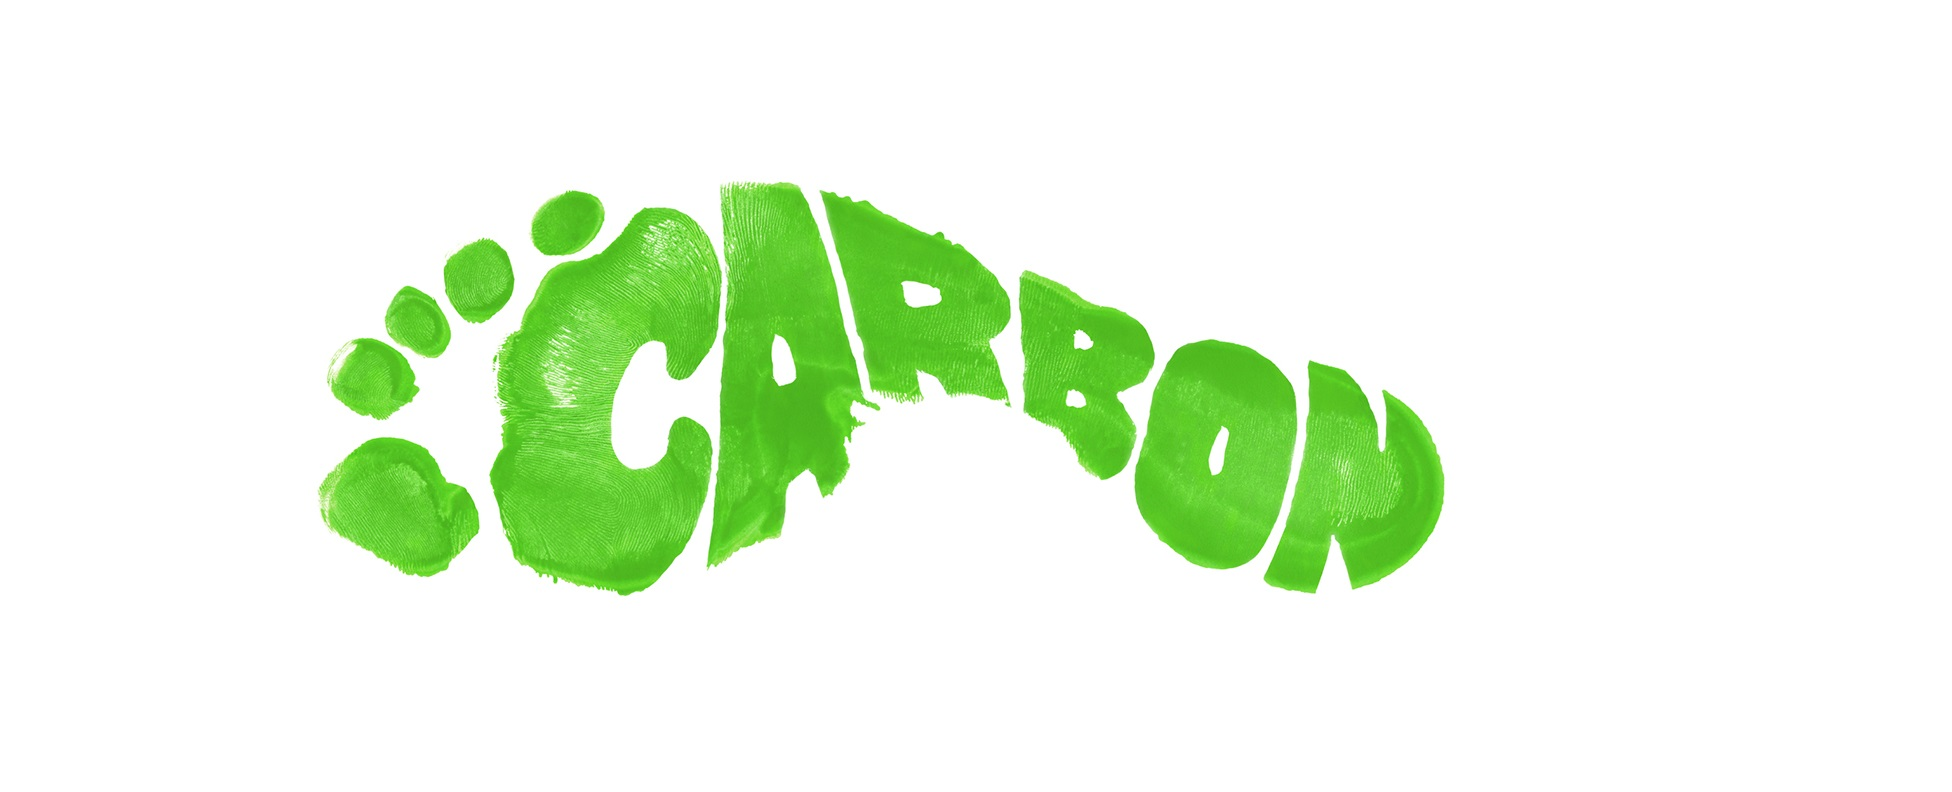 Carbon footprint illustration